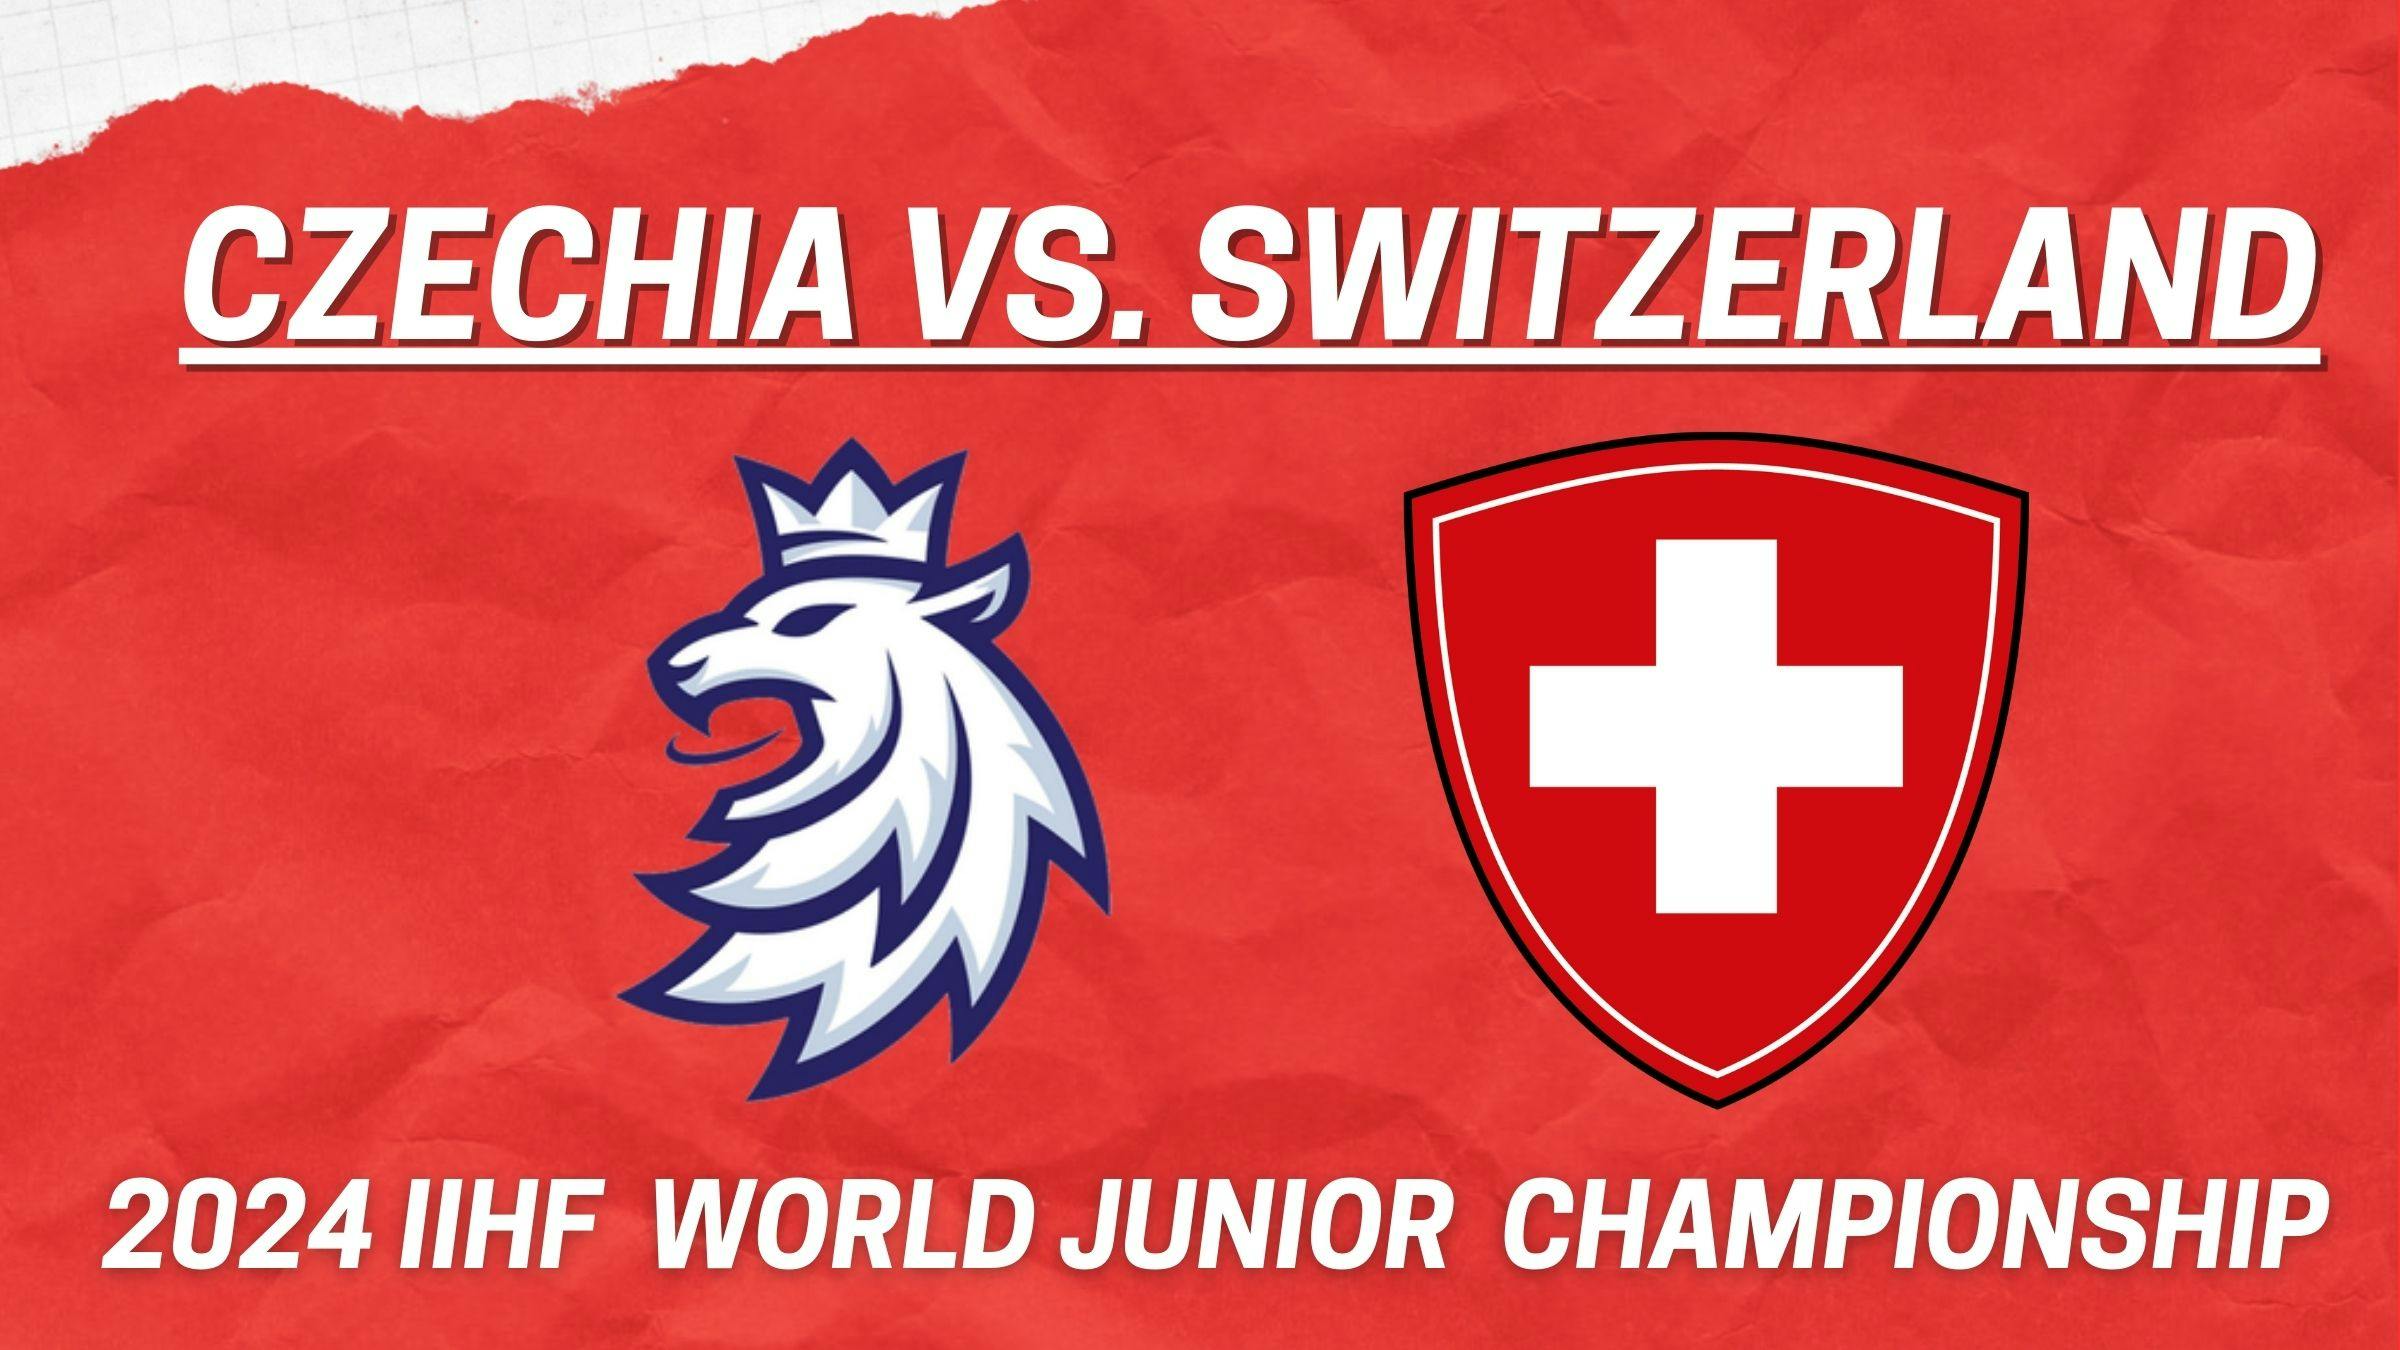 Top standouts from Czechia vs. Switzerland at 2024 World Junior Championship